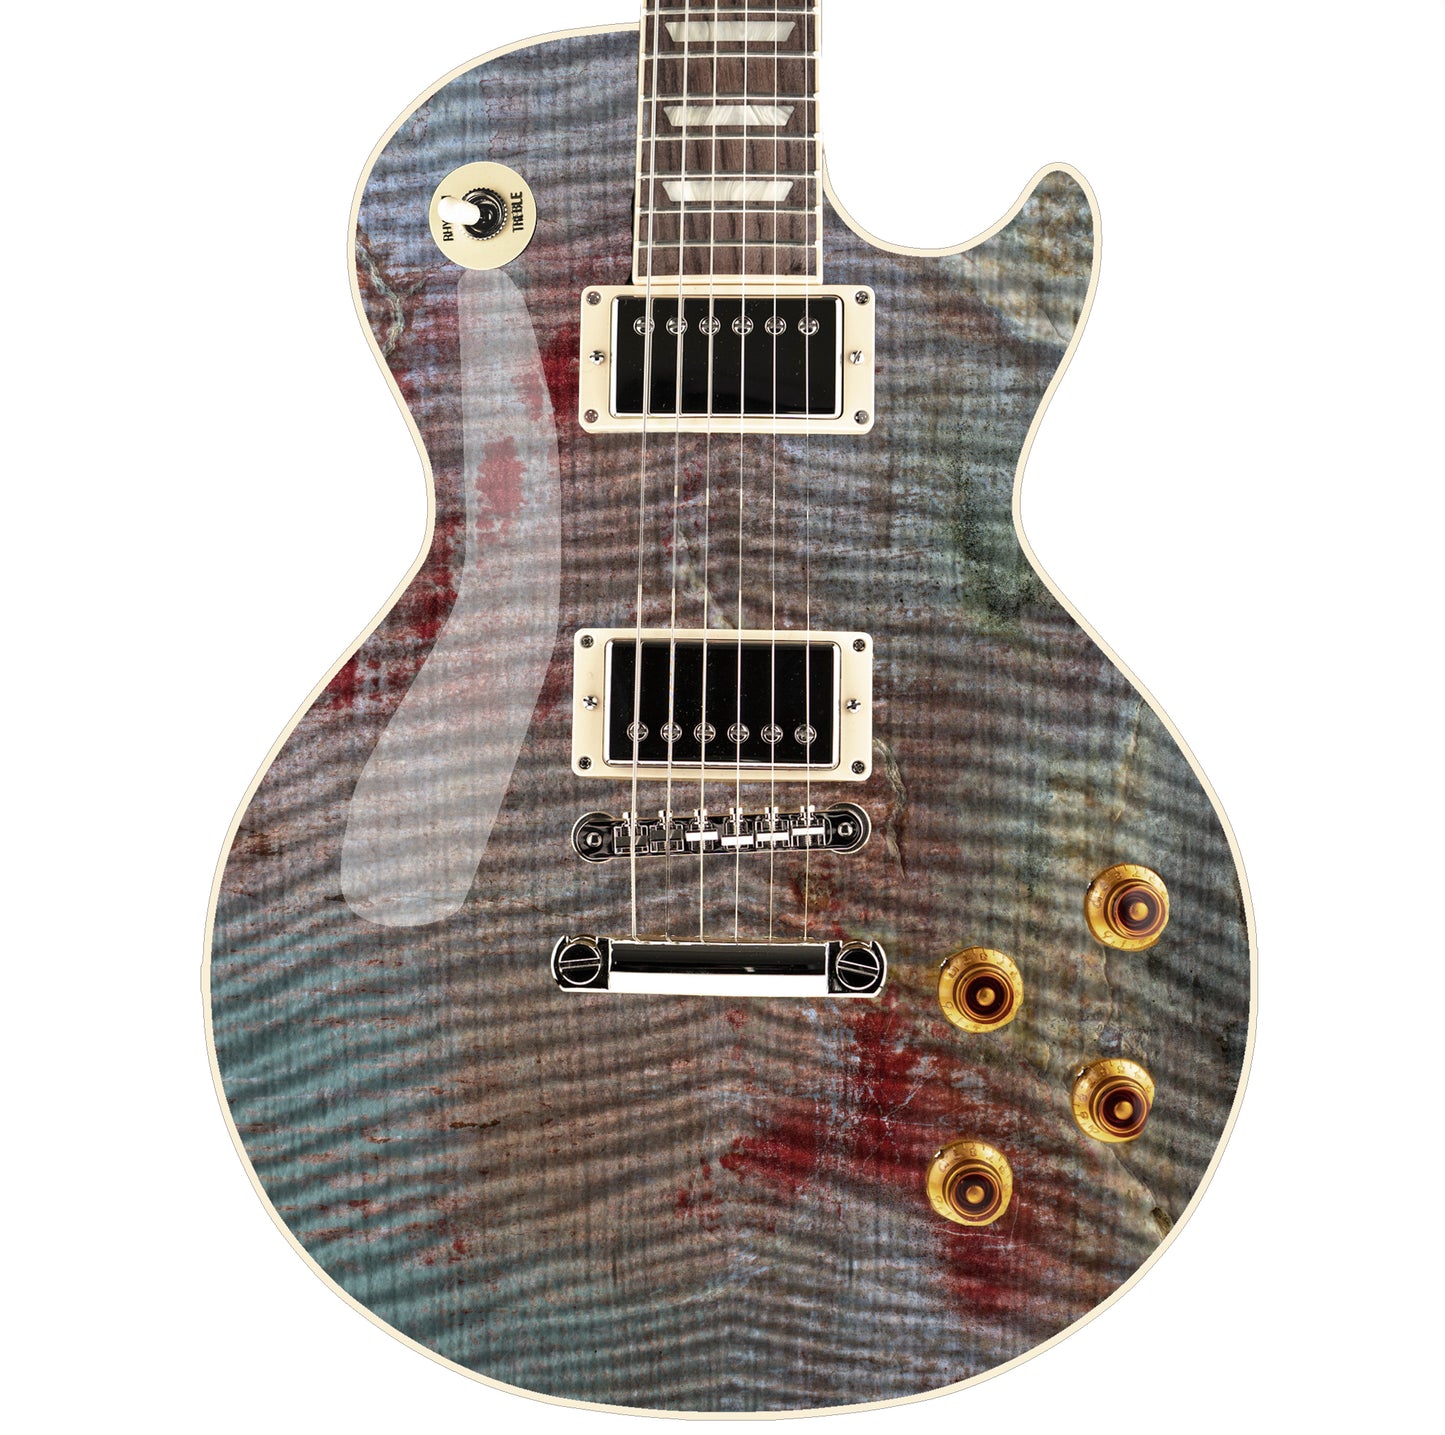 Guitar, Bass or Acoustic Skin Wrap Laminated Vinyl Decal Sticker Granite Flame GS87